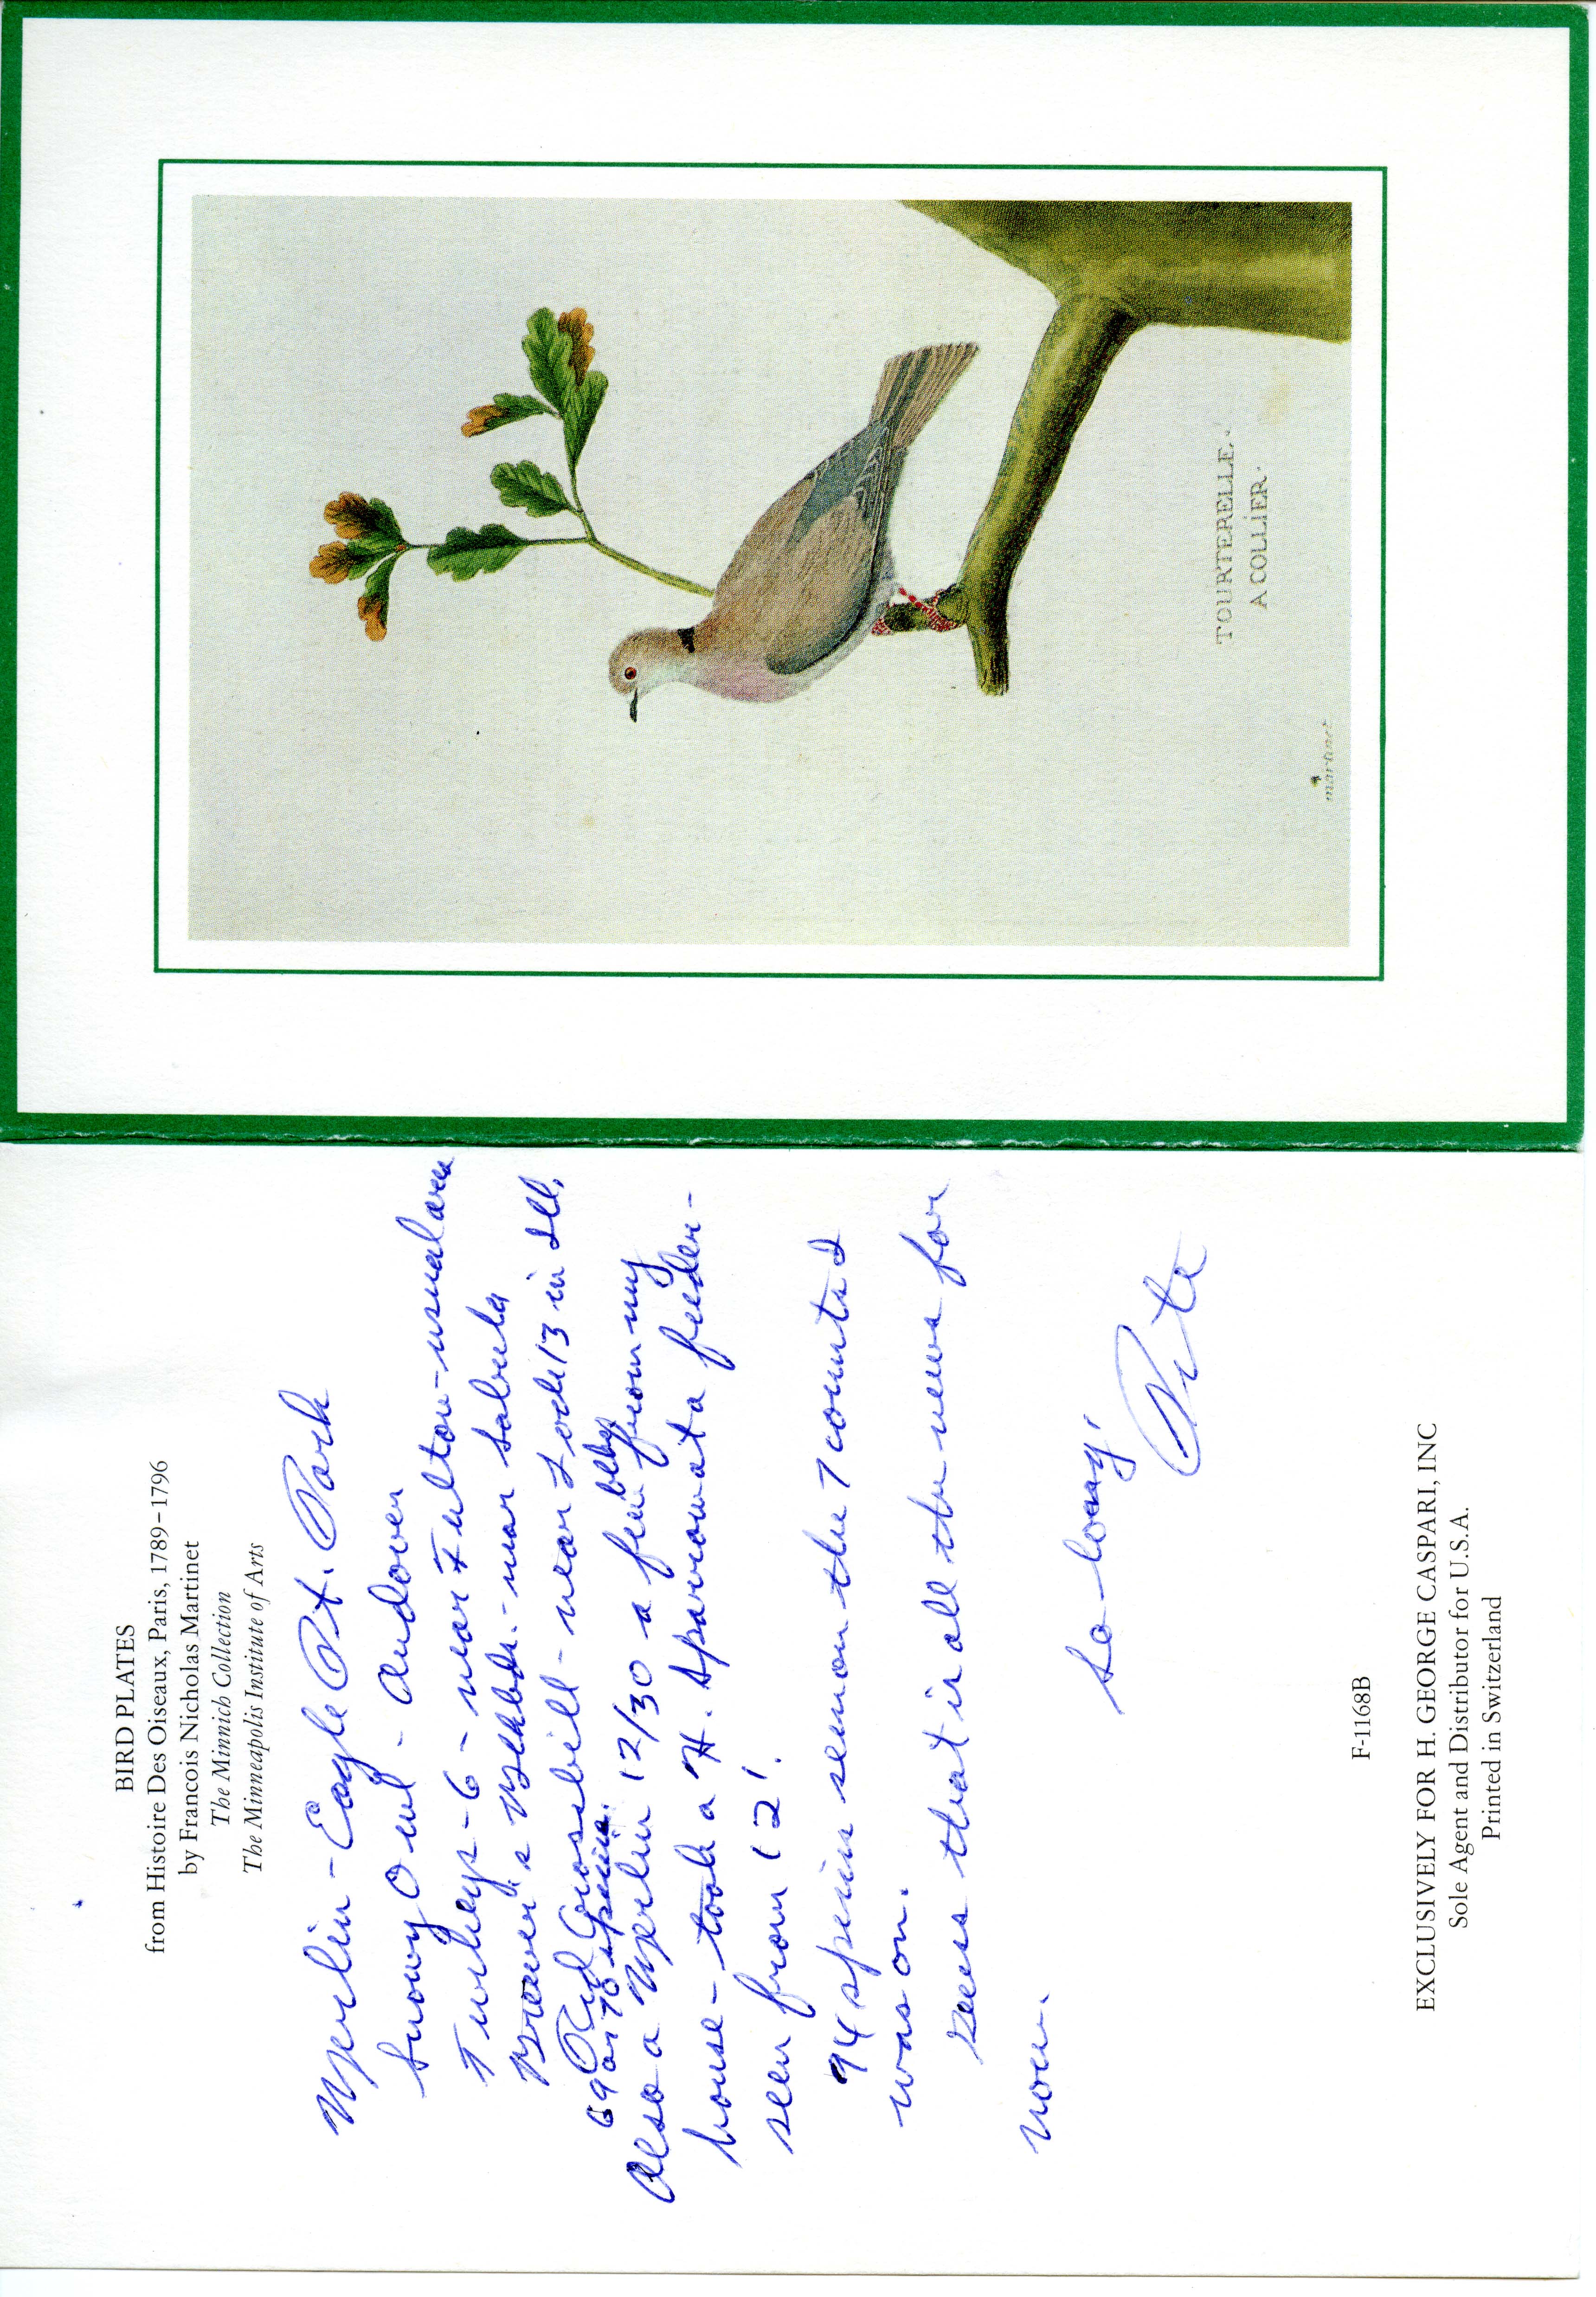 Peter C. Petersen letter to Nicholas S. Halmi regarding bird sightings, January 3, 1977